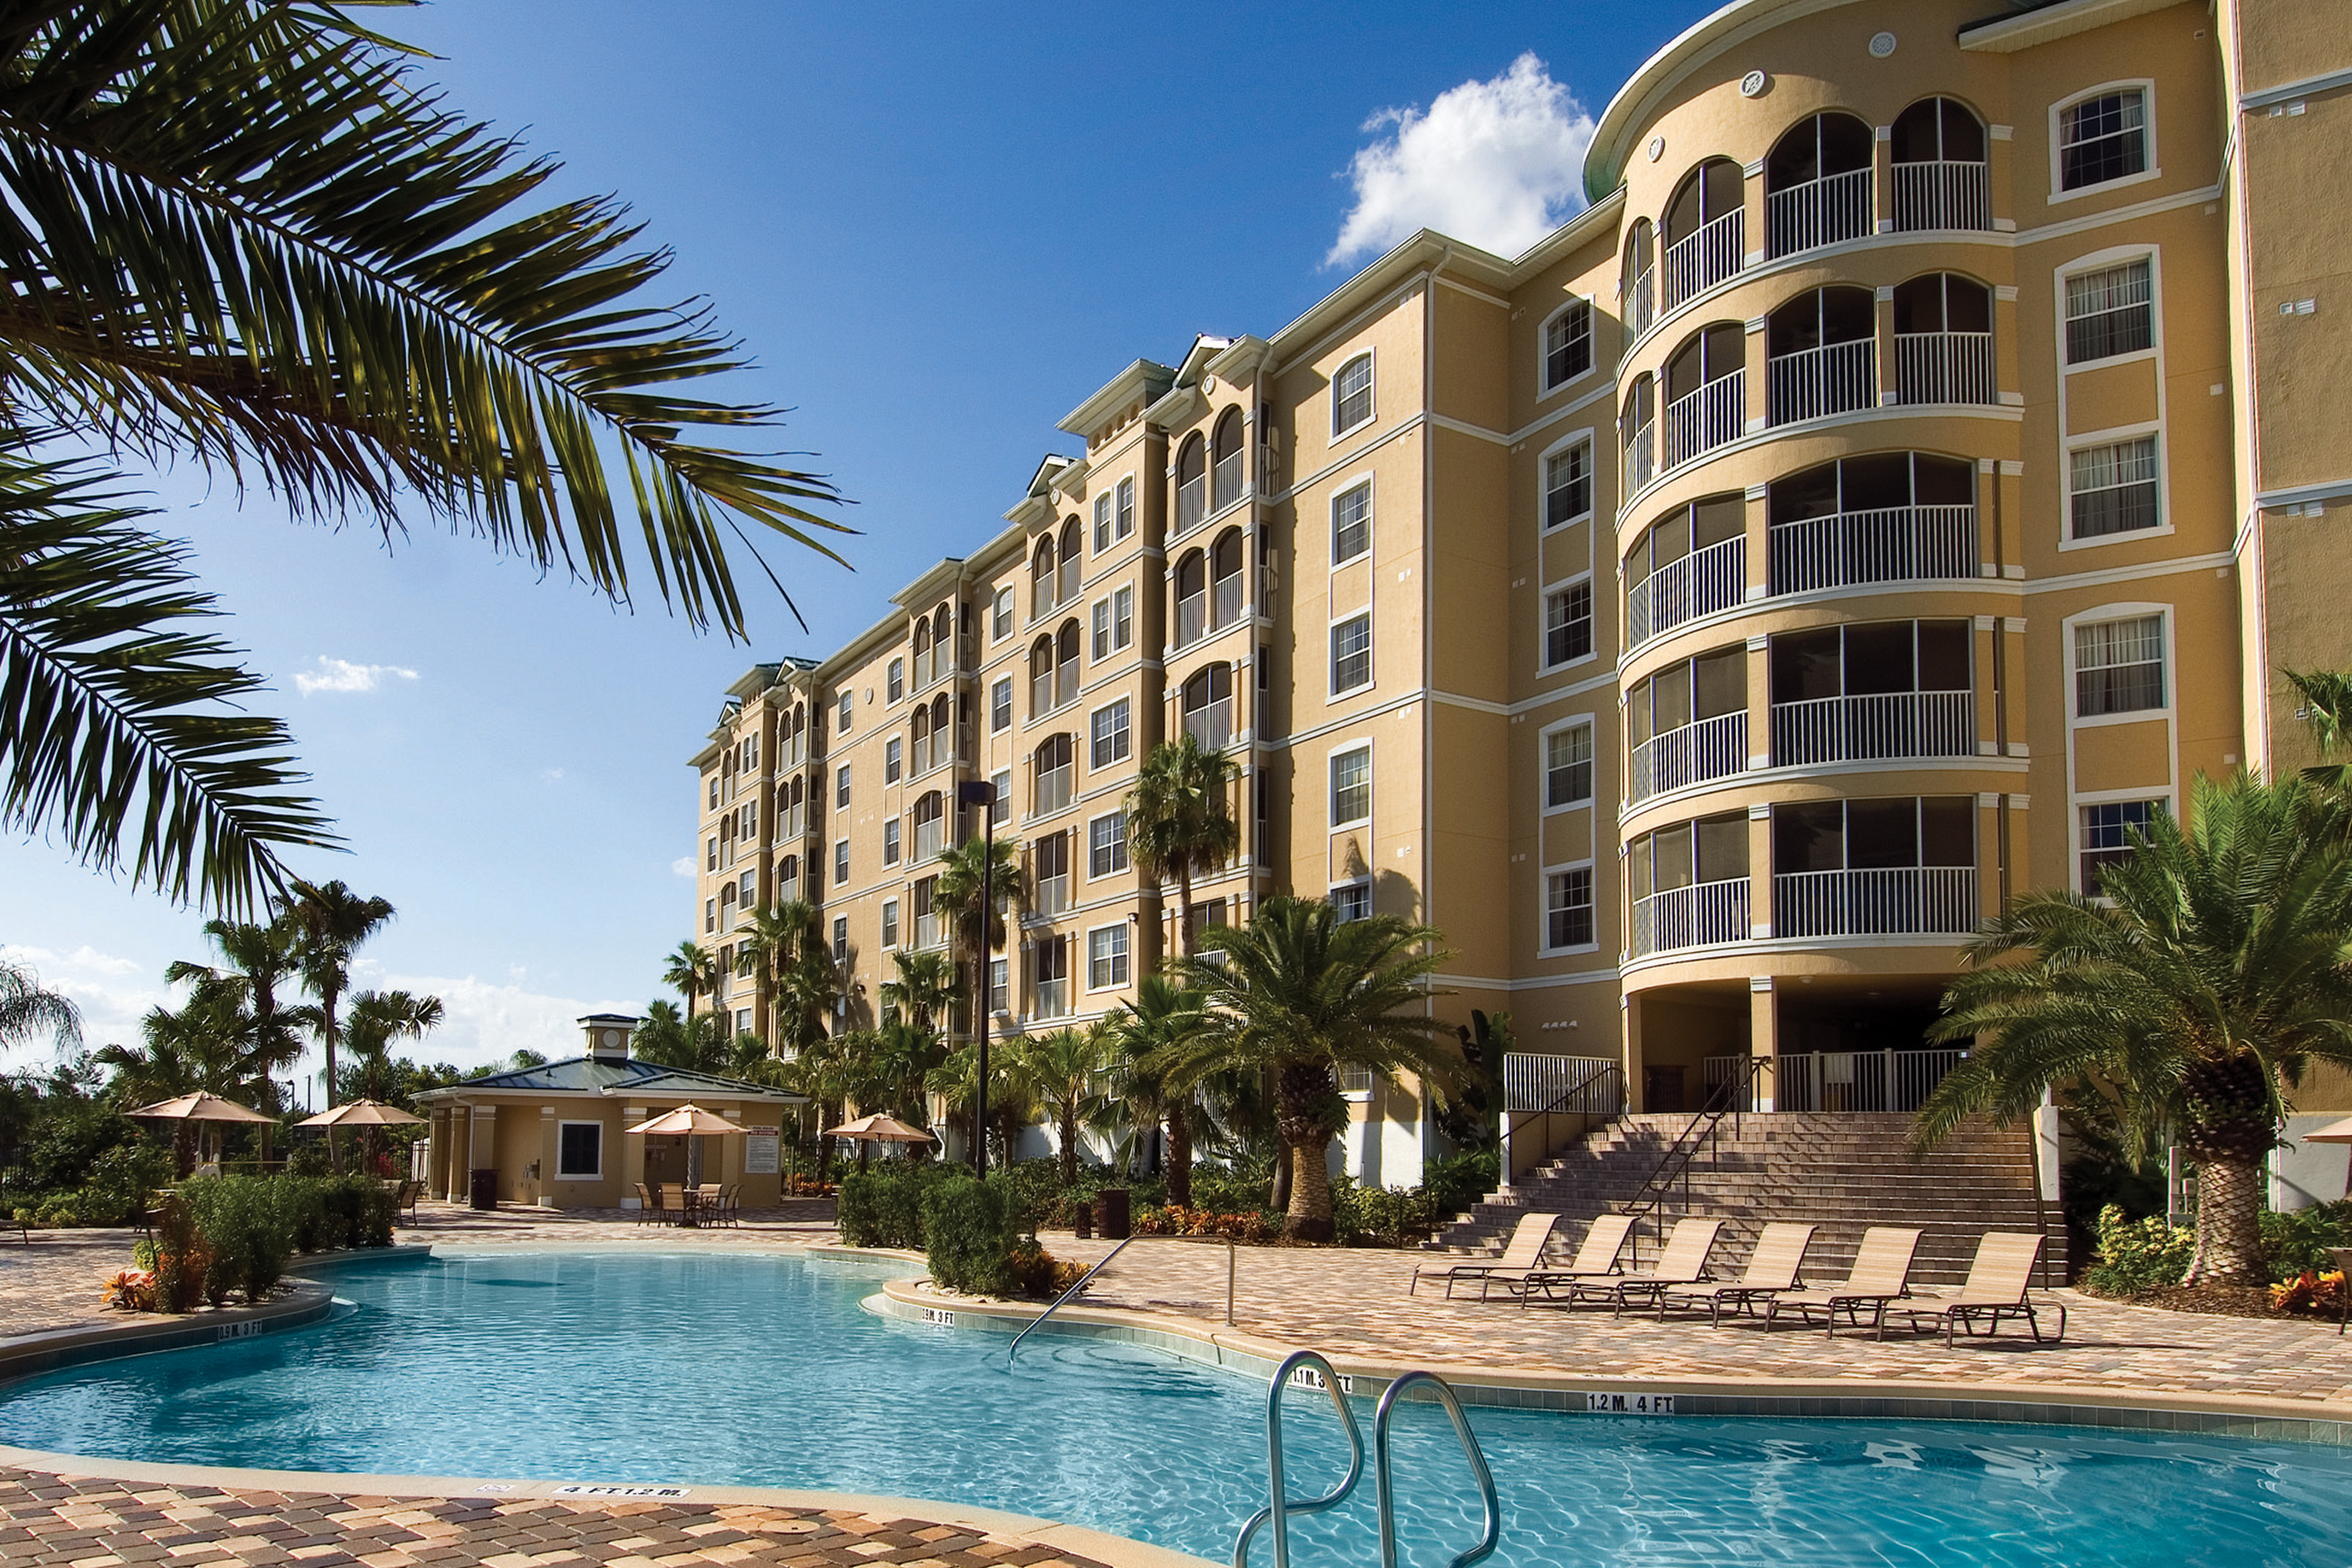 Hilton Vacation Club Mystic Dunes Orlando in Celebration | VISIT FLORIDA